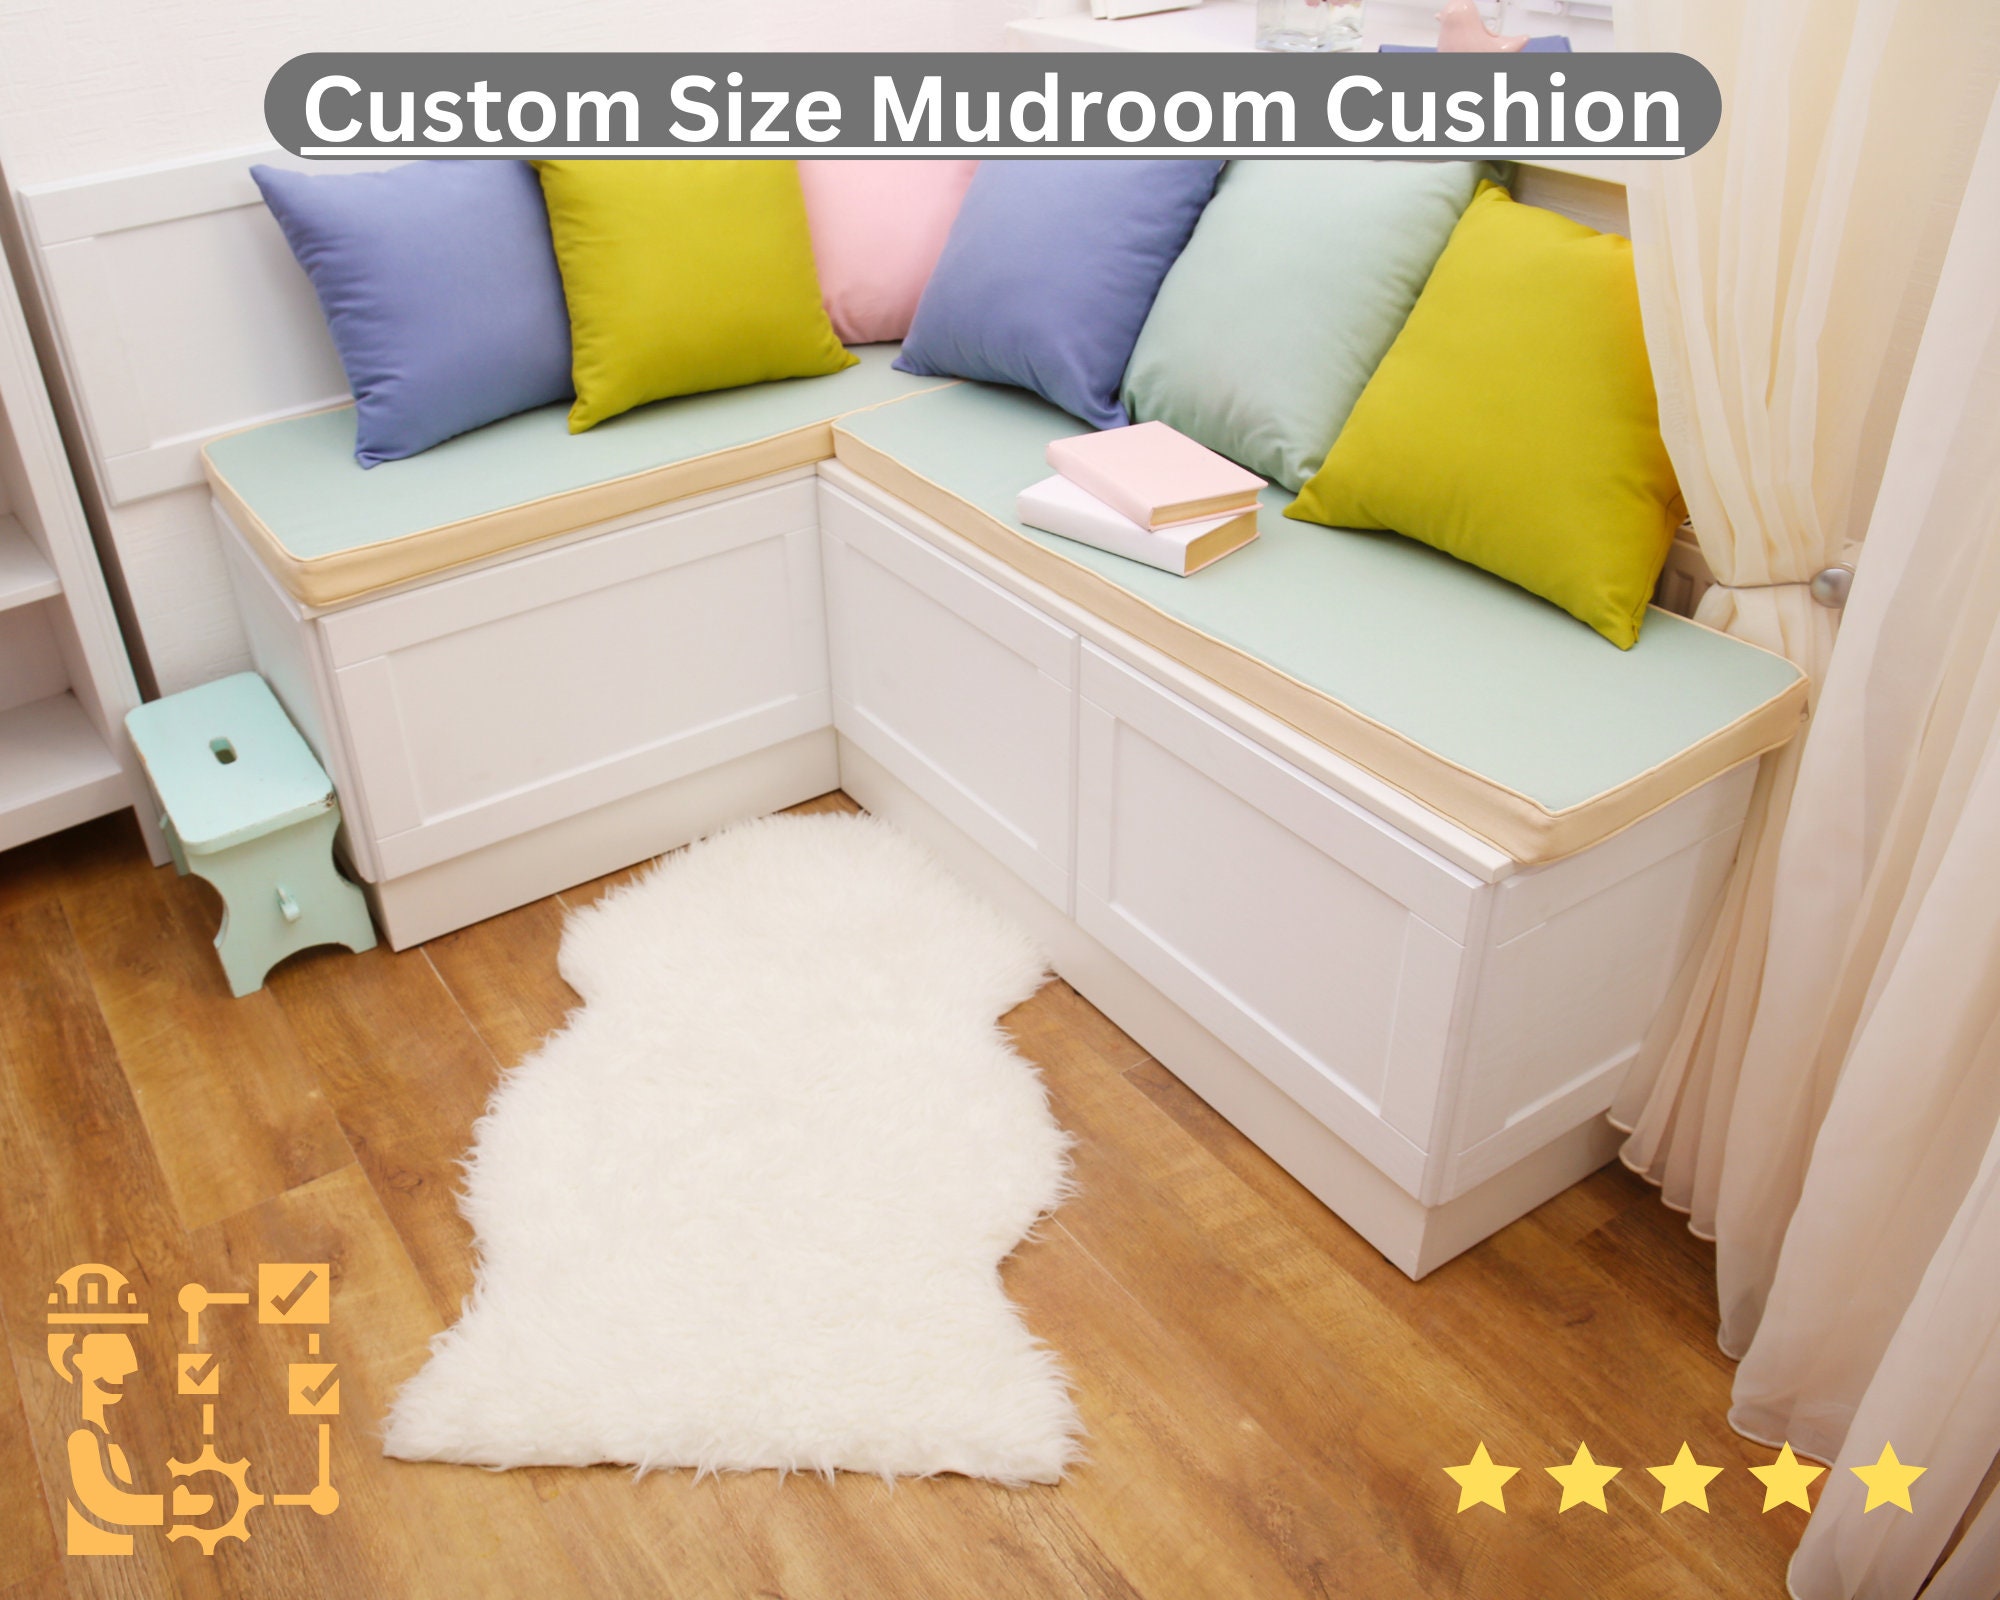 White Hemp Linen Window Mudroom Floor Bench Cushion filled organic Hemp  Fiber filling in Linen Fabric Custom Made